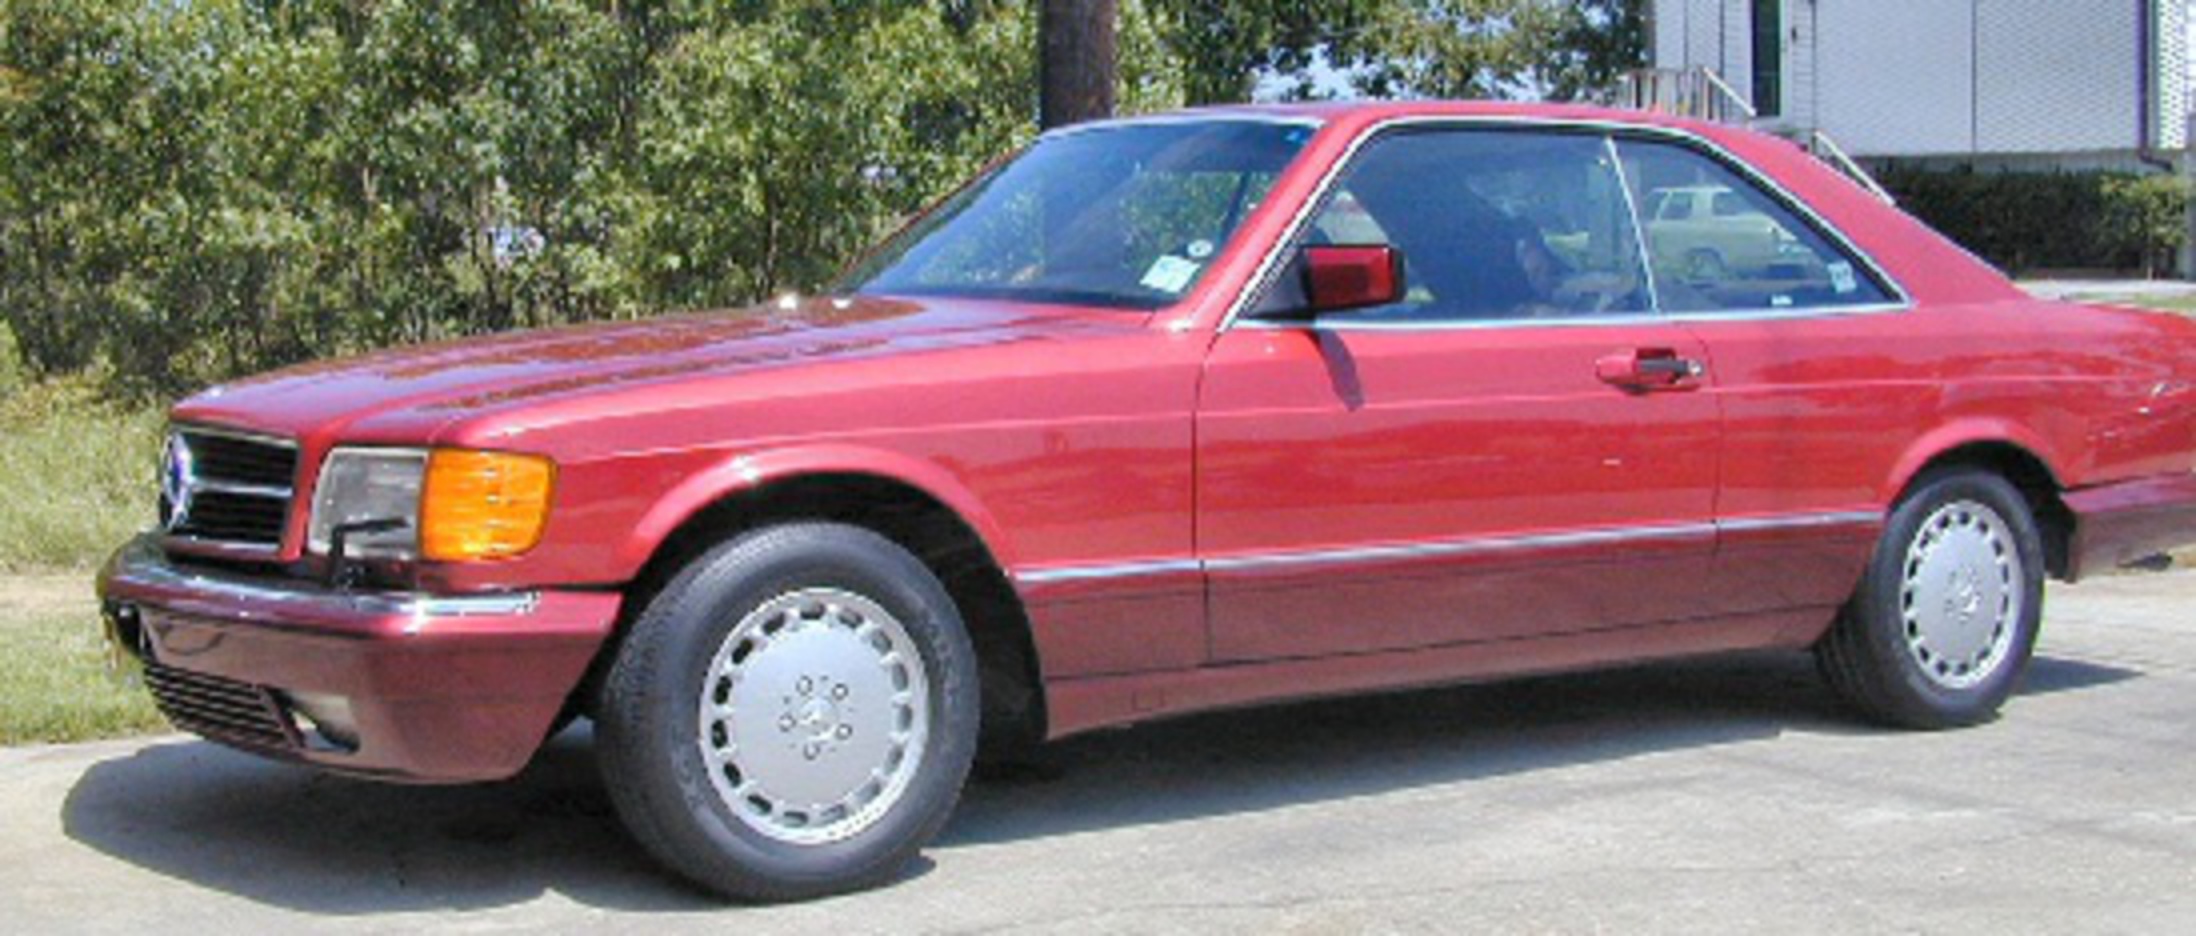 1989 Mercedes Benz - 560 SEC Coupe In excellent shape.